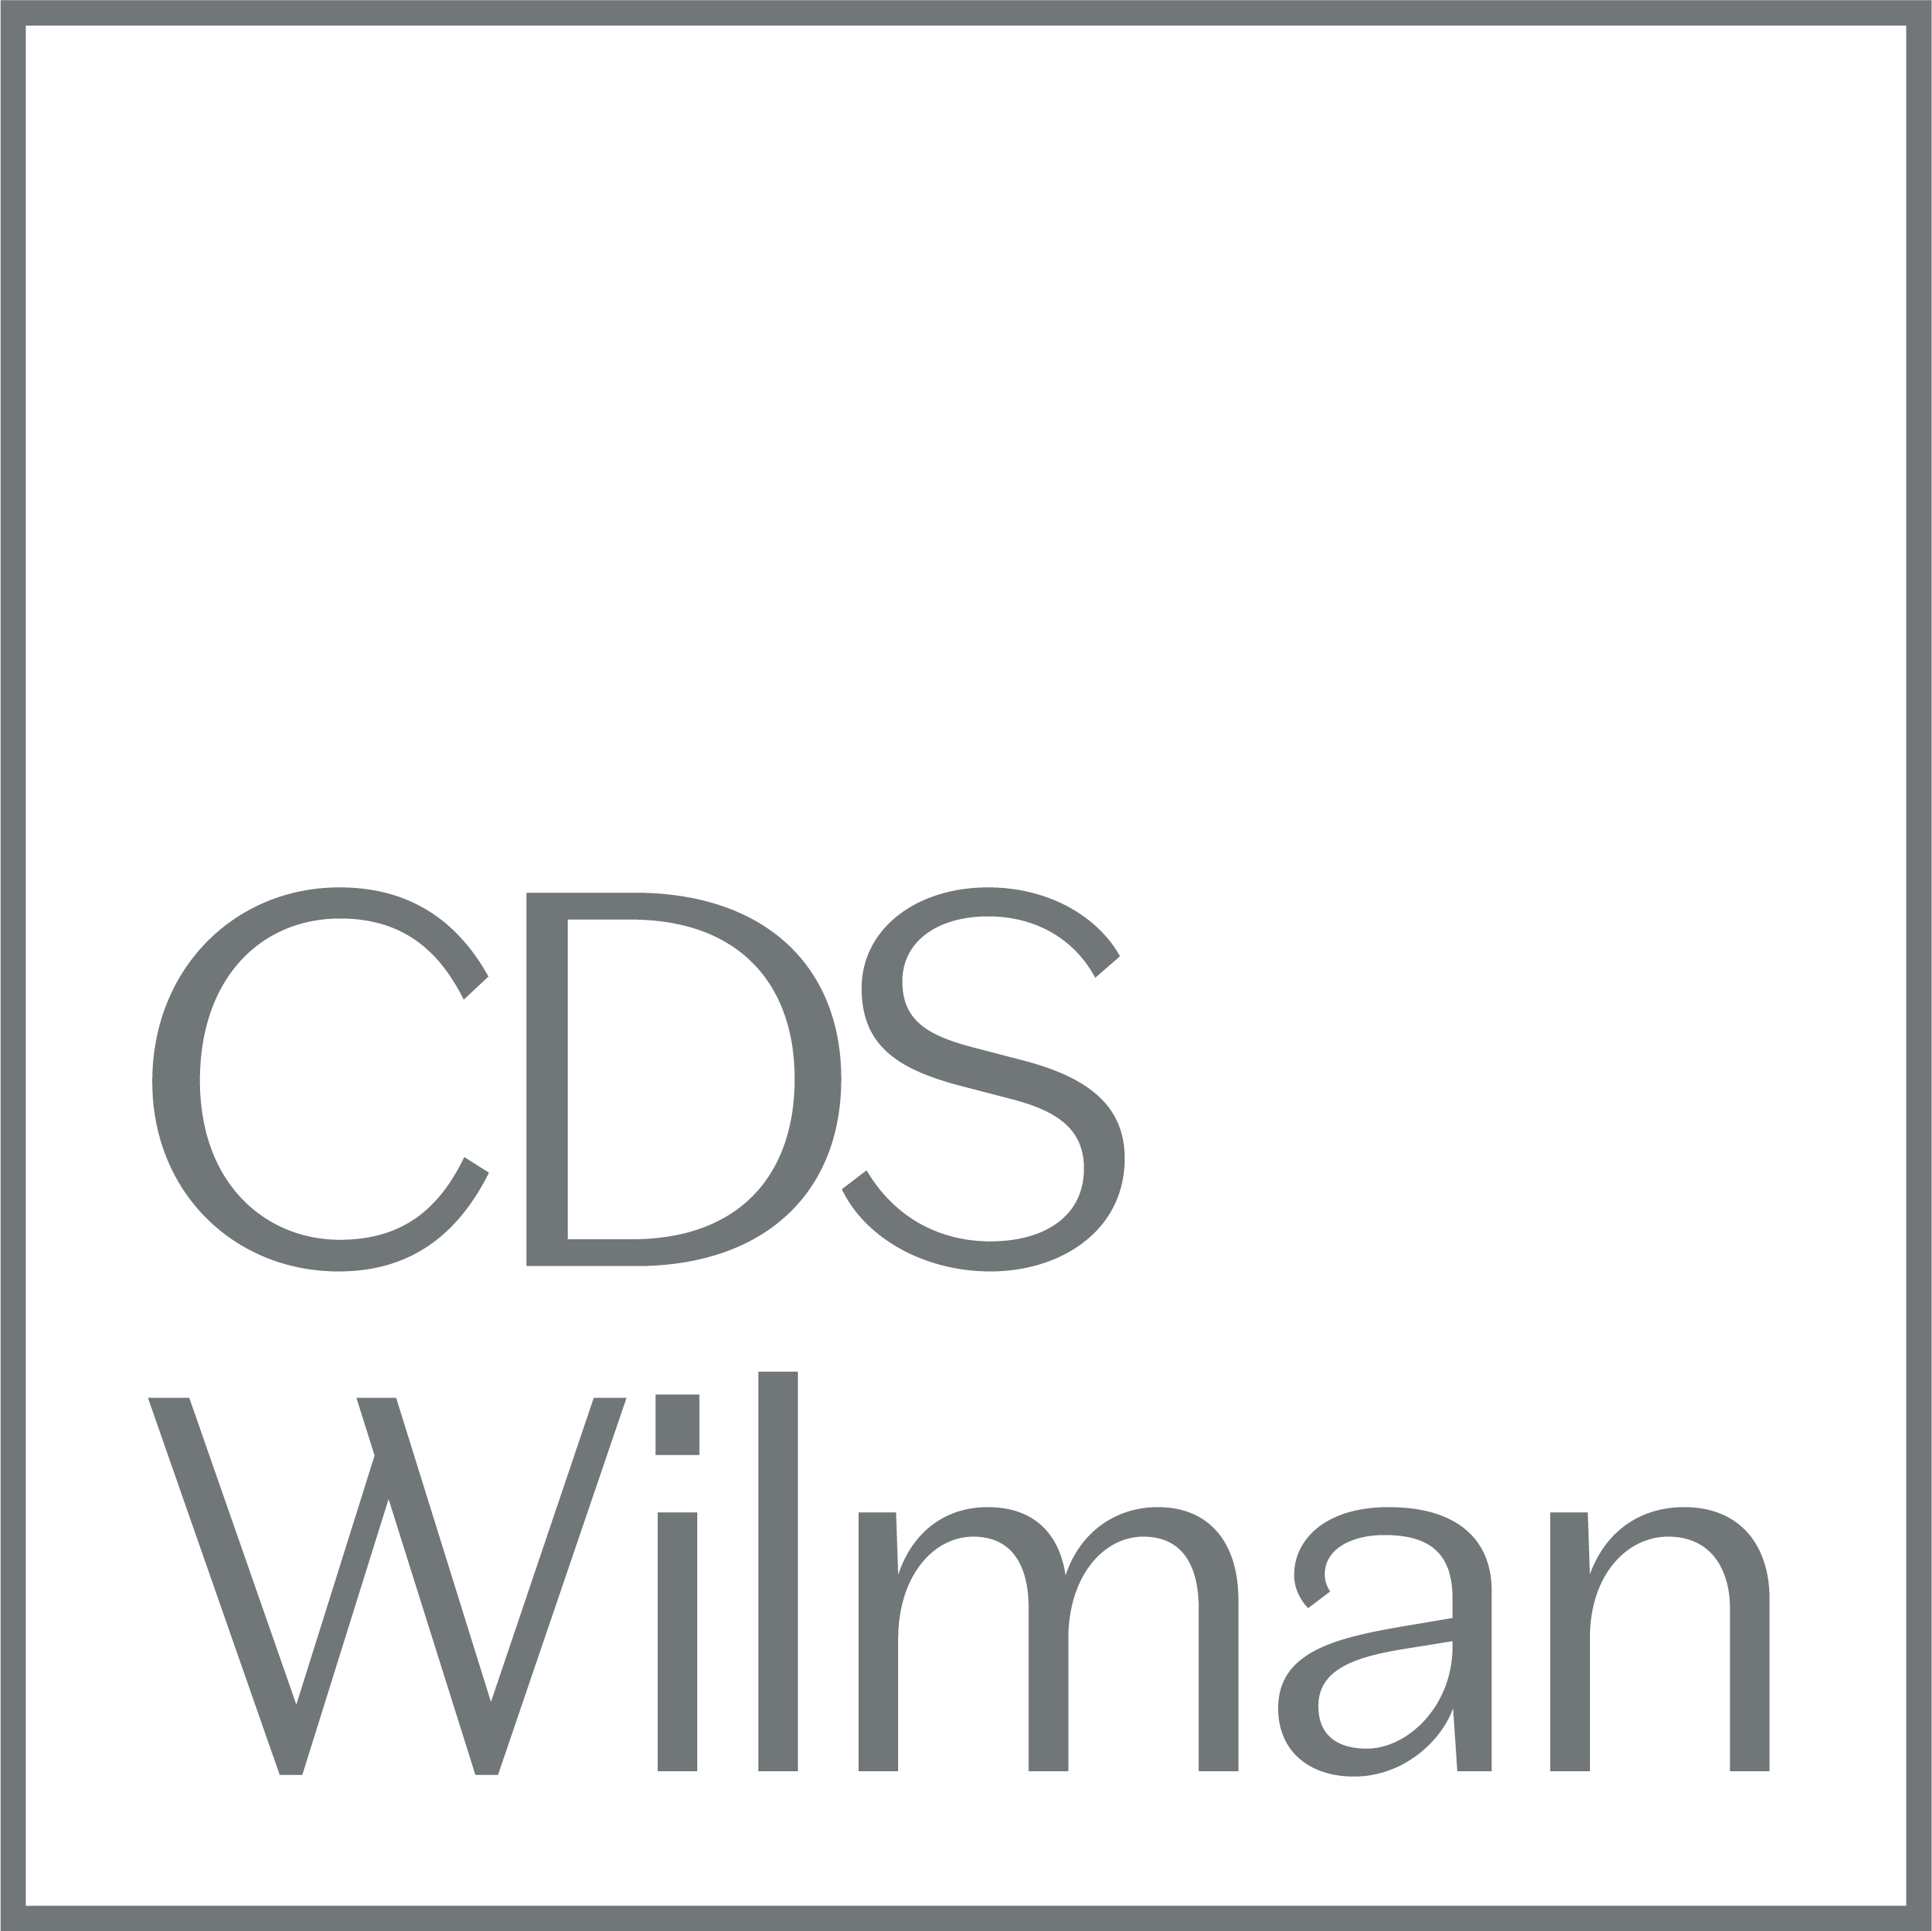 CDS Wilman